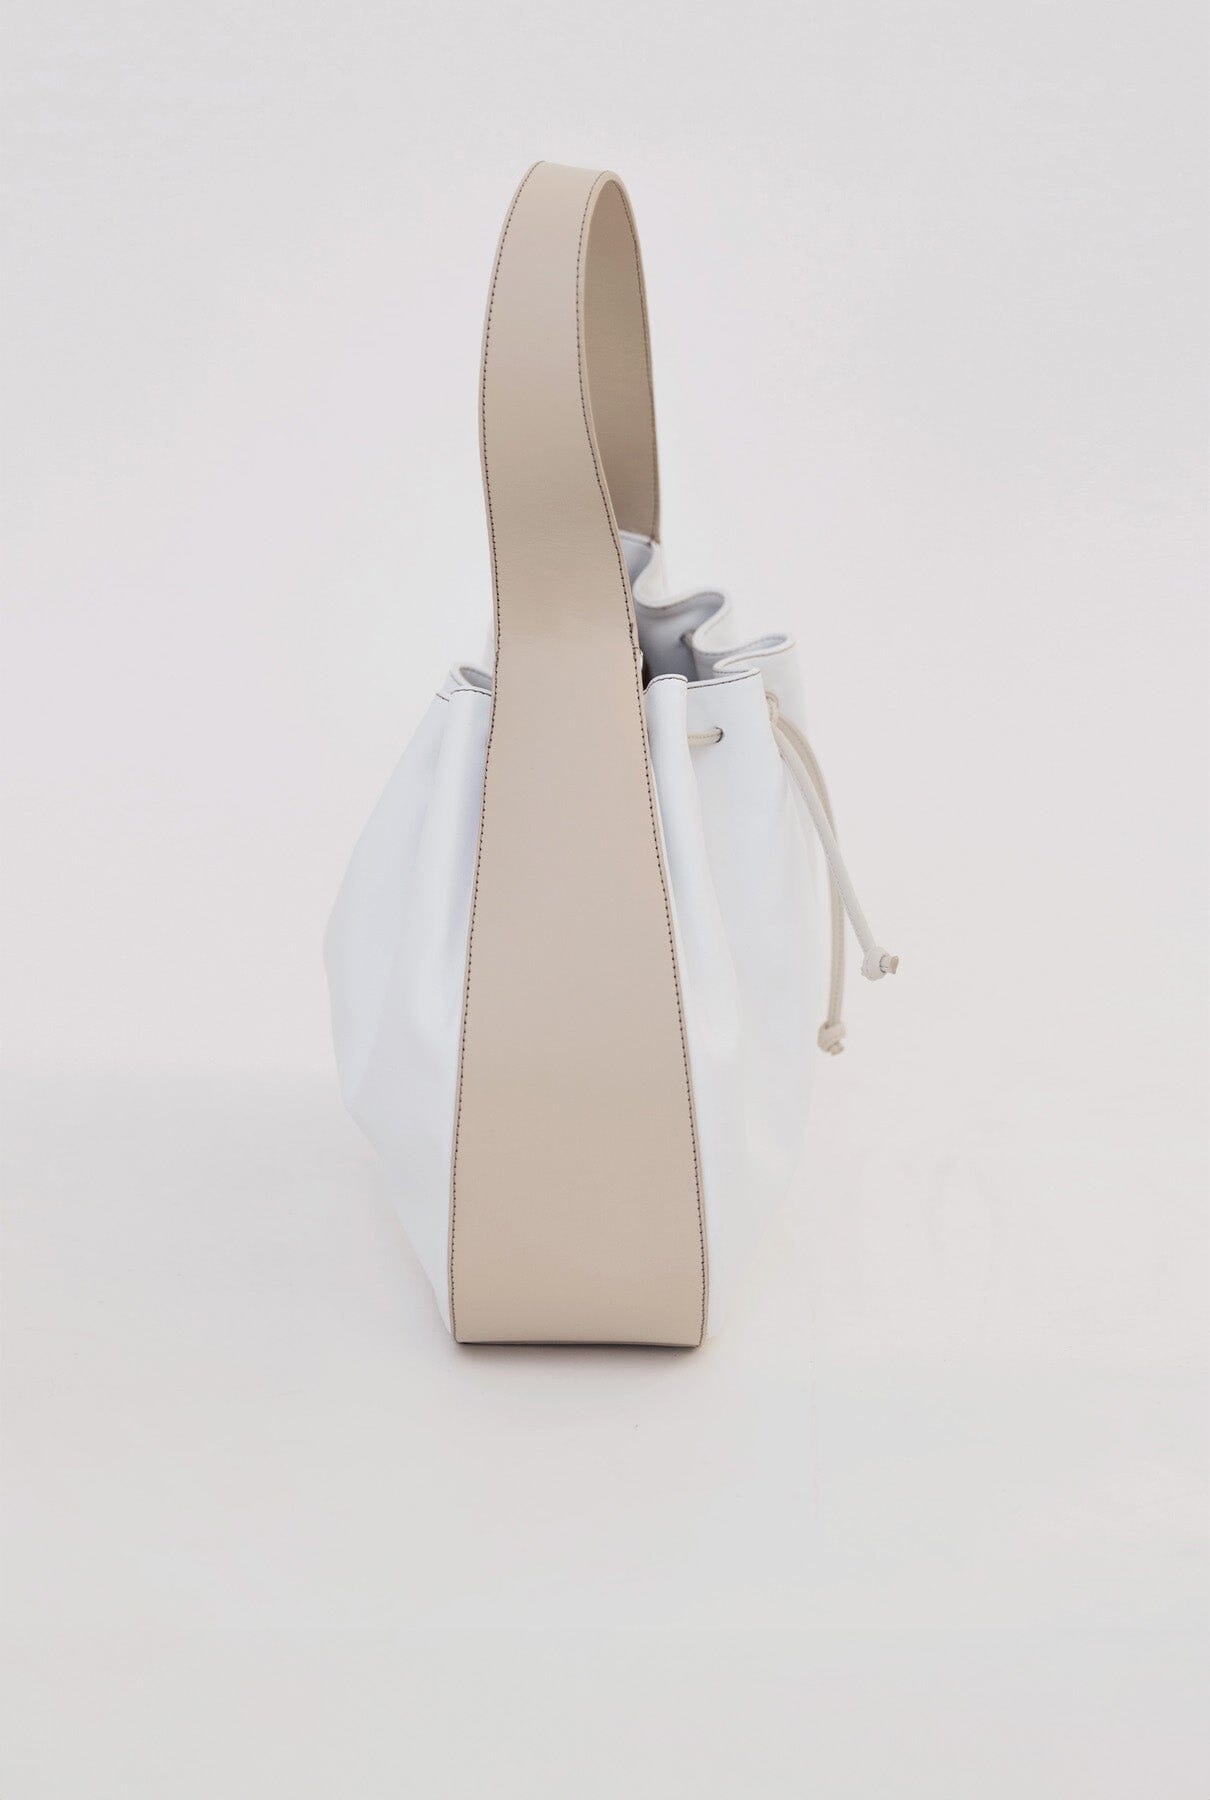 Sac Leather Bag White Shoulder bags The Villã Concept 